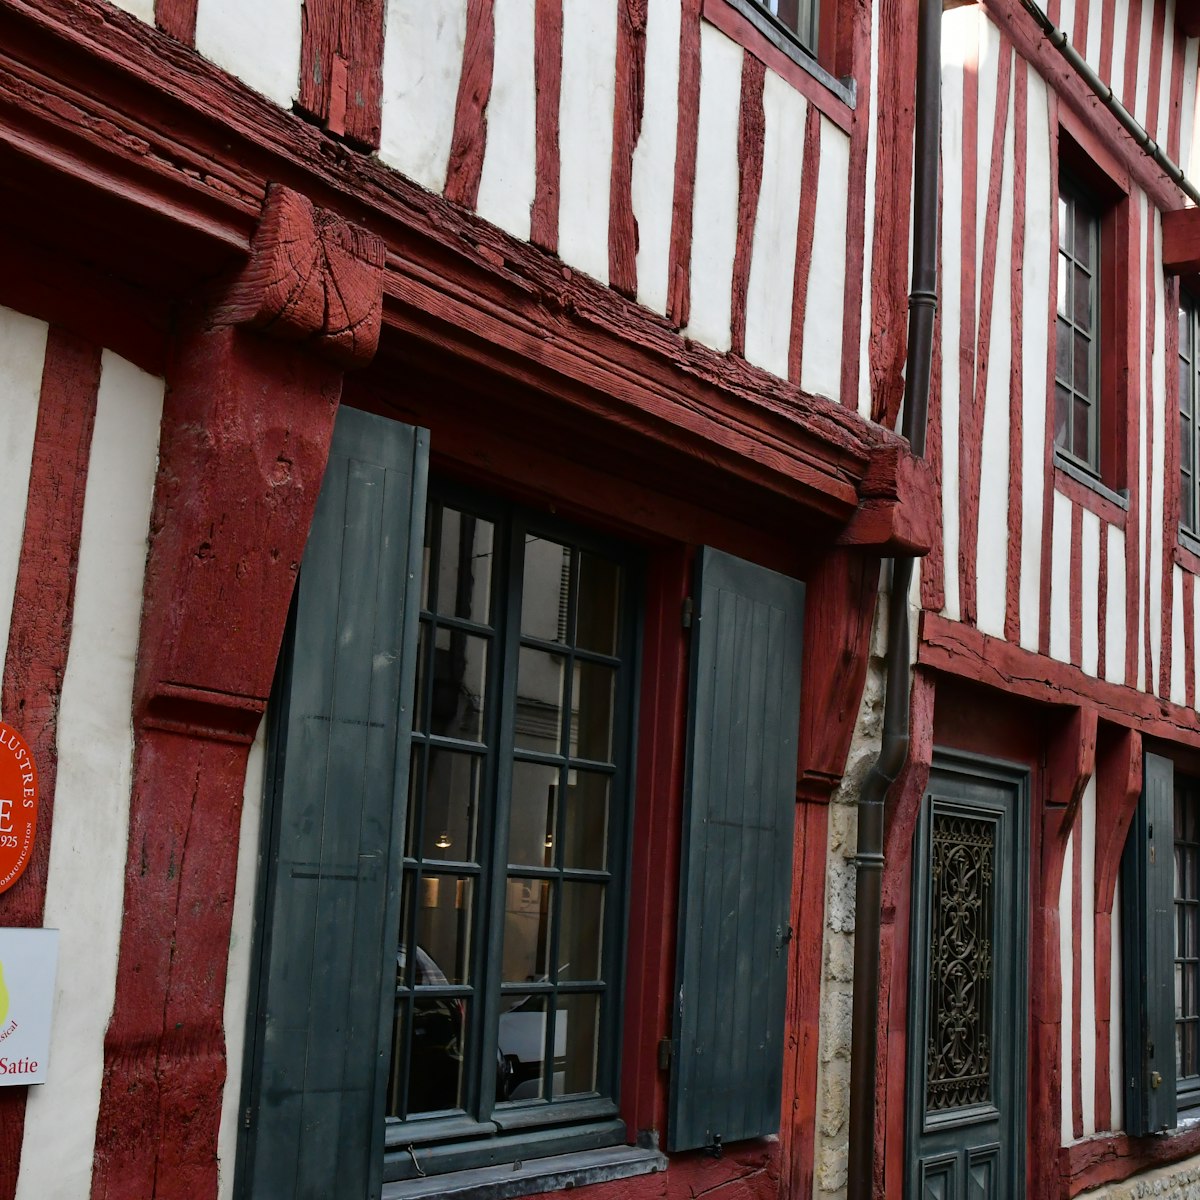 The Erik Satie house in Honfleur, France.